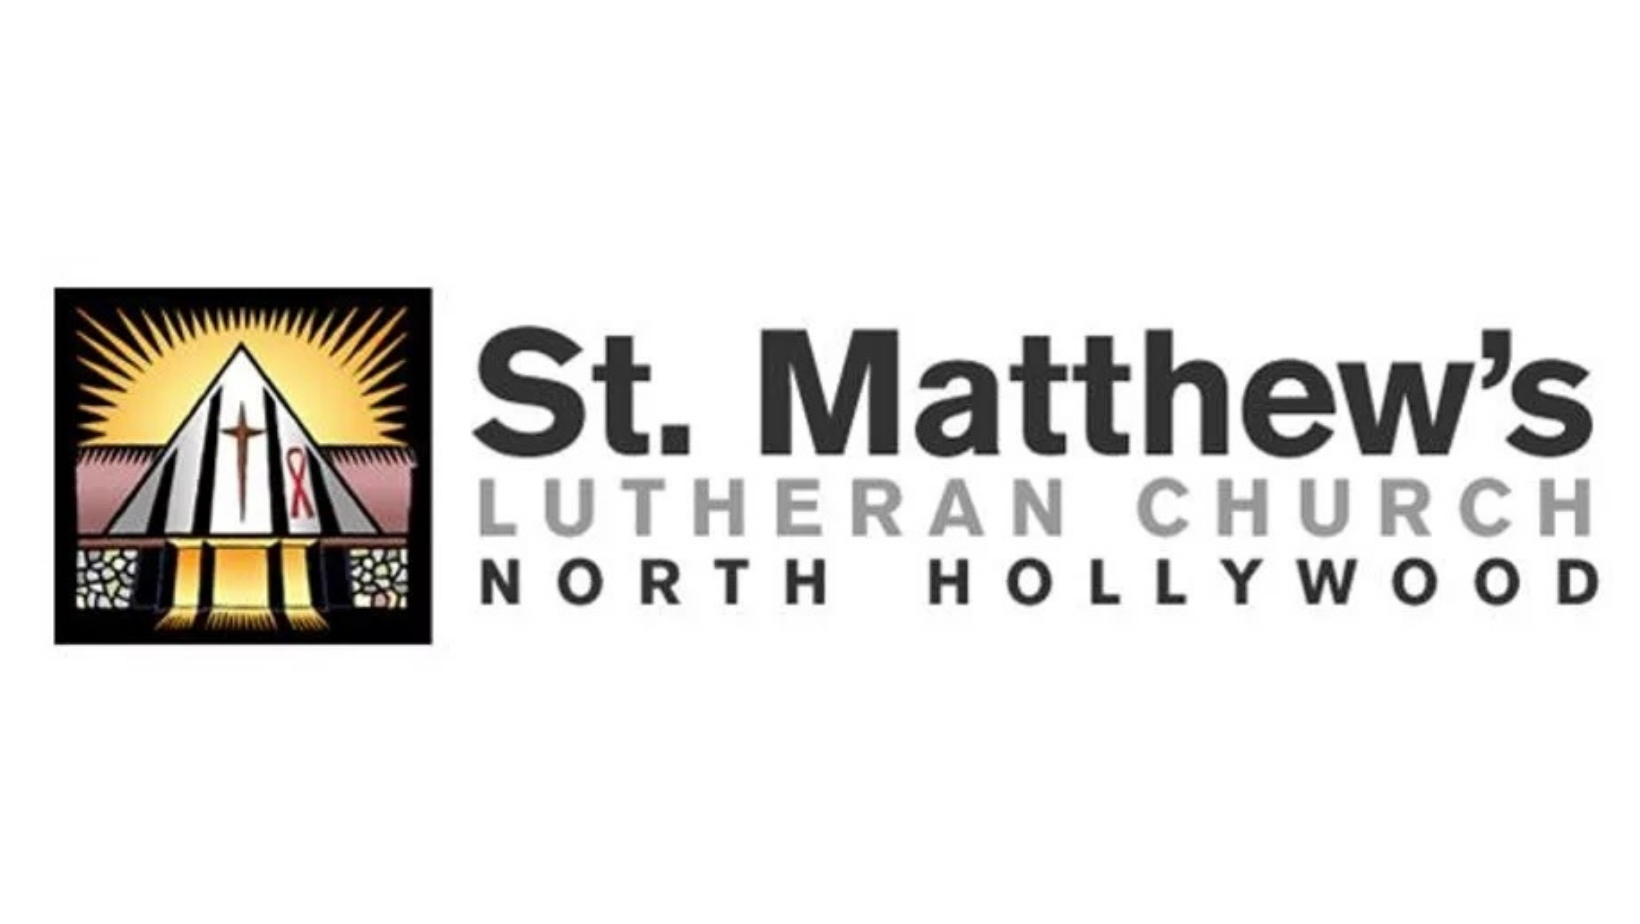 St. Matthew's Lutheran Church North Hollywood